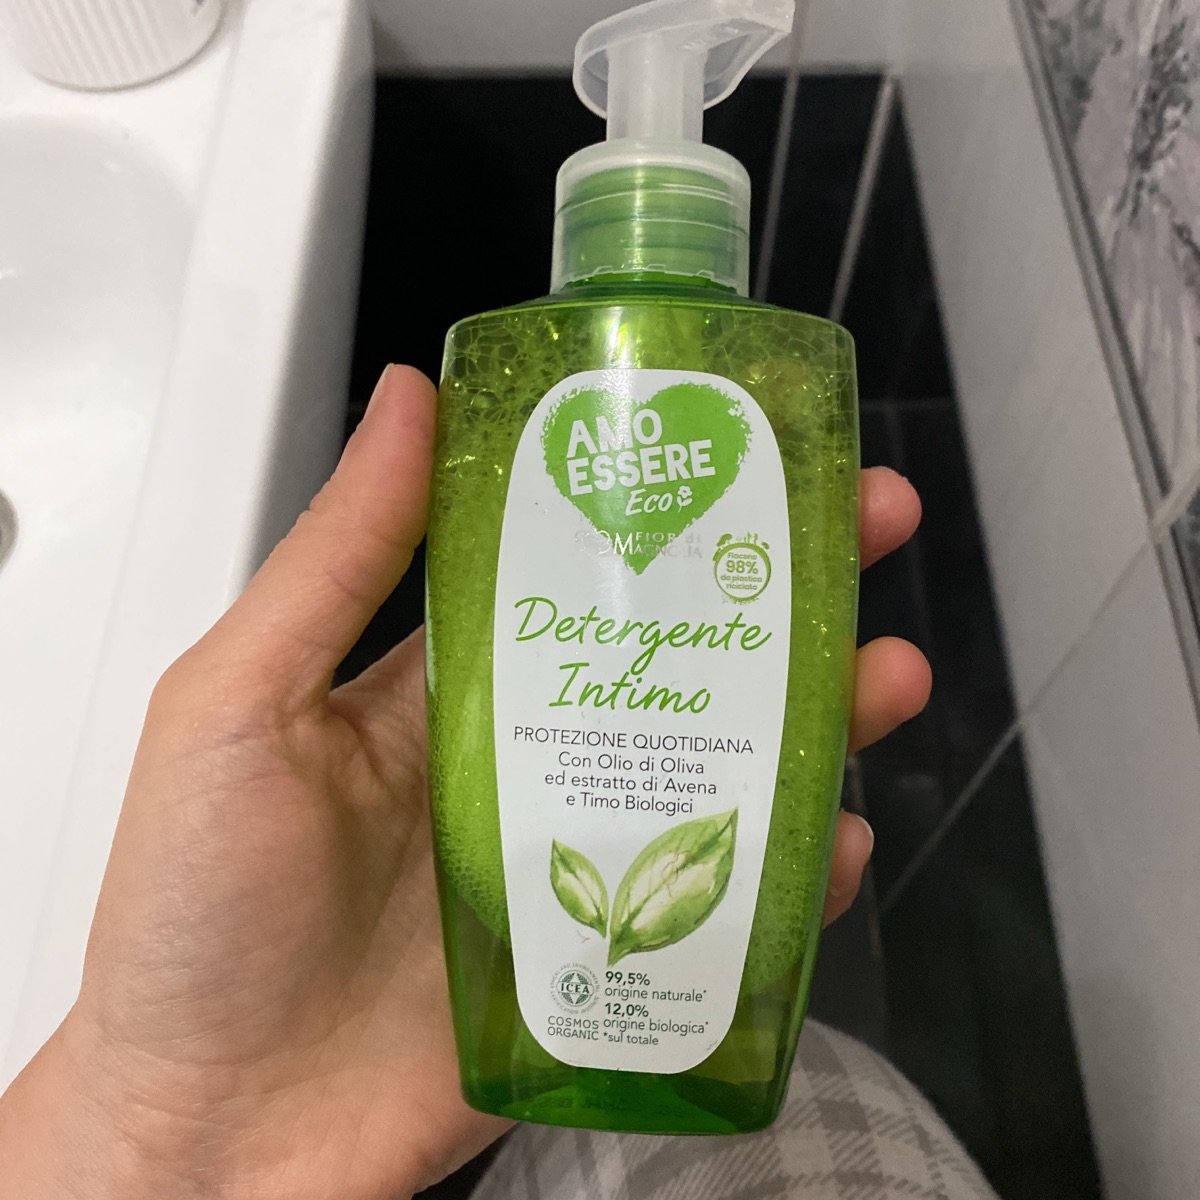 Amo essere eco Detergente Intimo Reviews | abillion